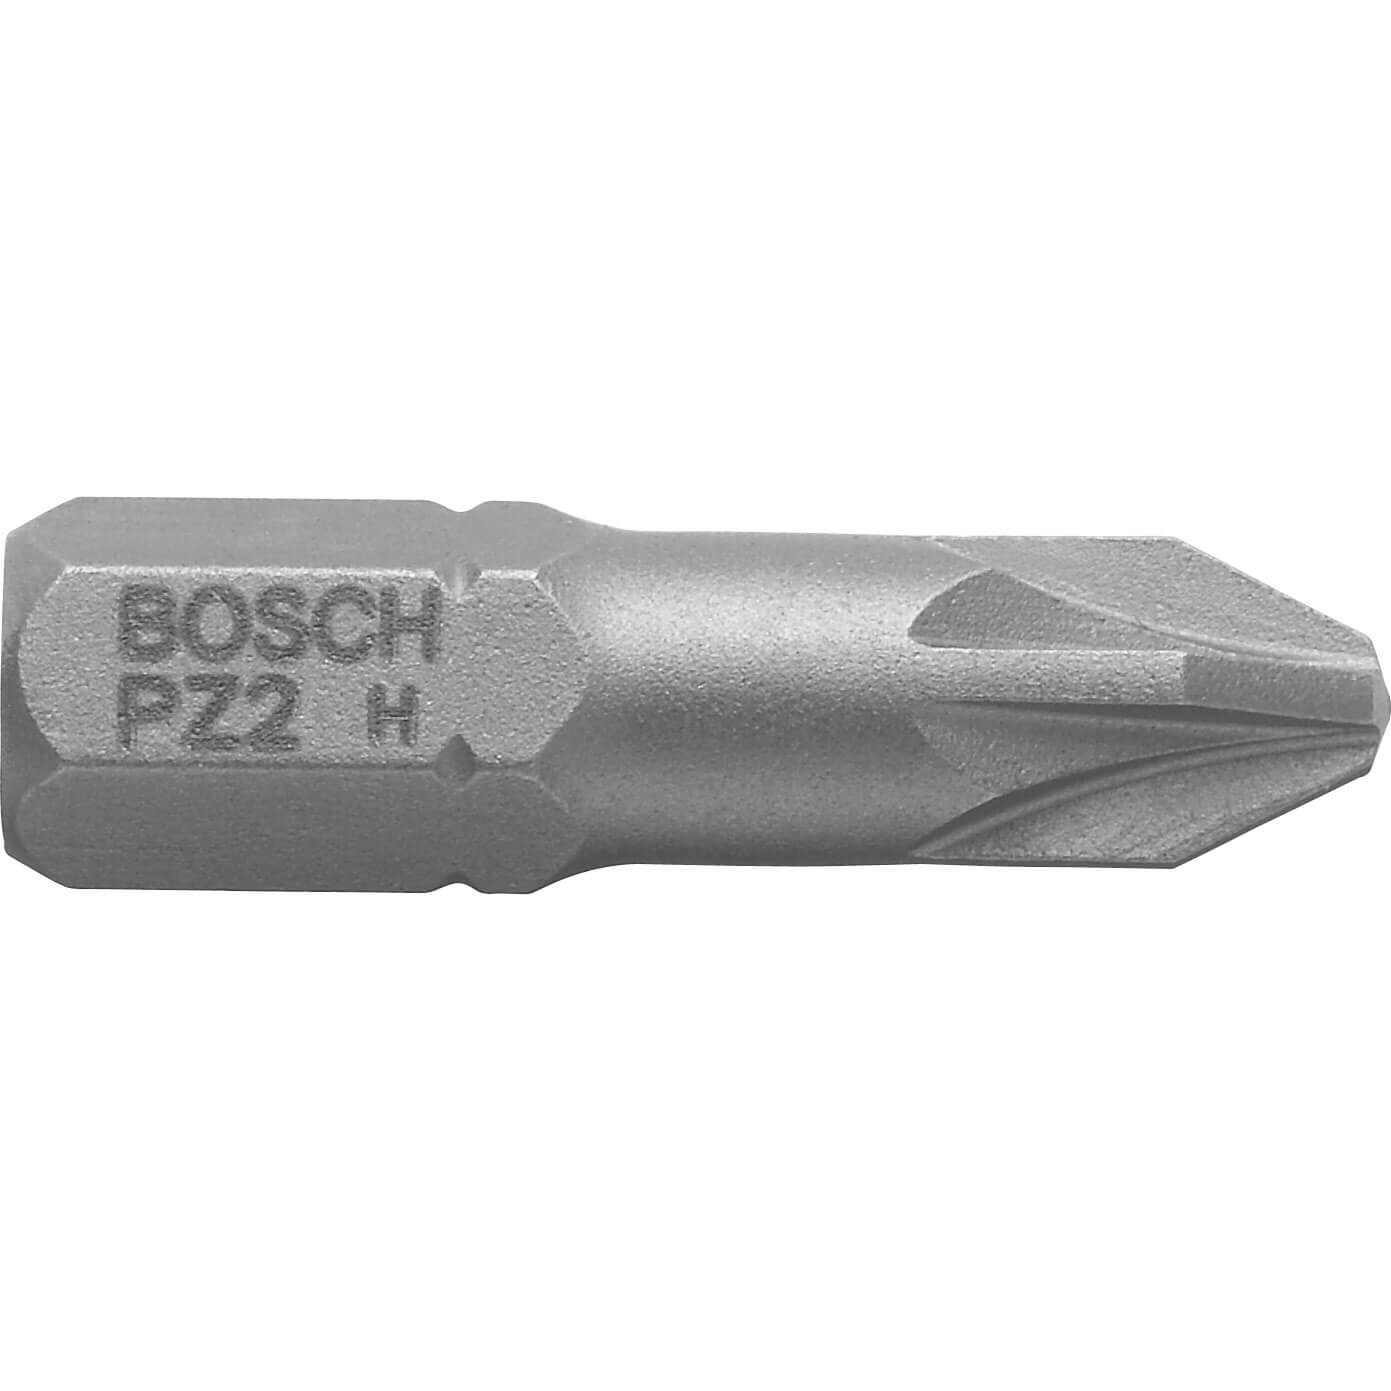 Photo of Bosch Pz2 Tic Tac Box Extra Hard Pozi Screwdriver Bits Pz2 25mm Pack Of 25